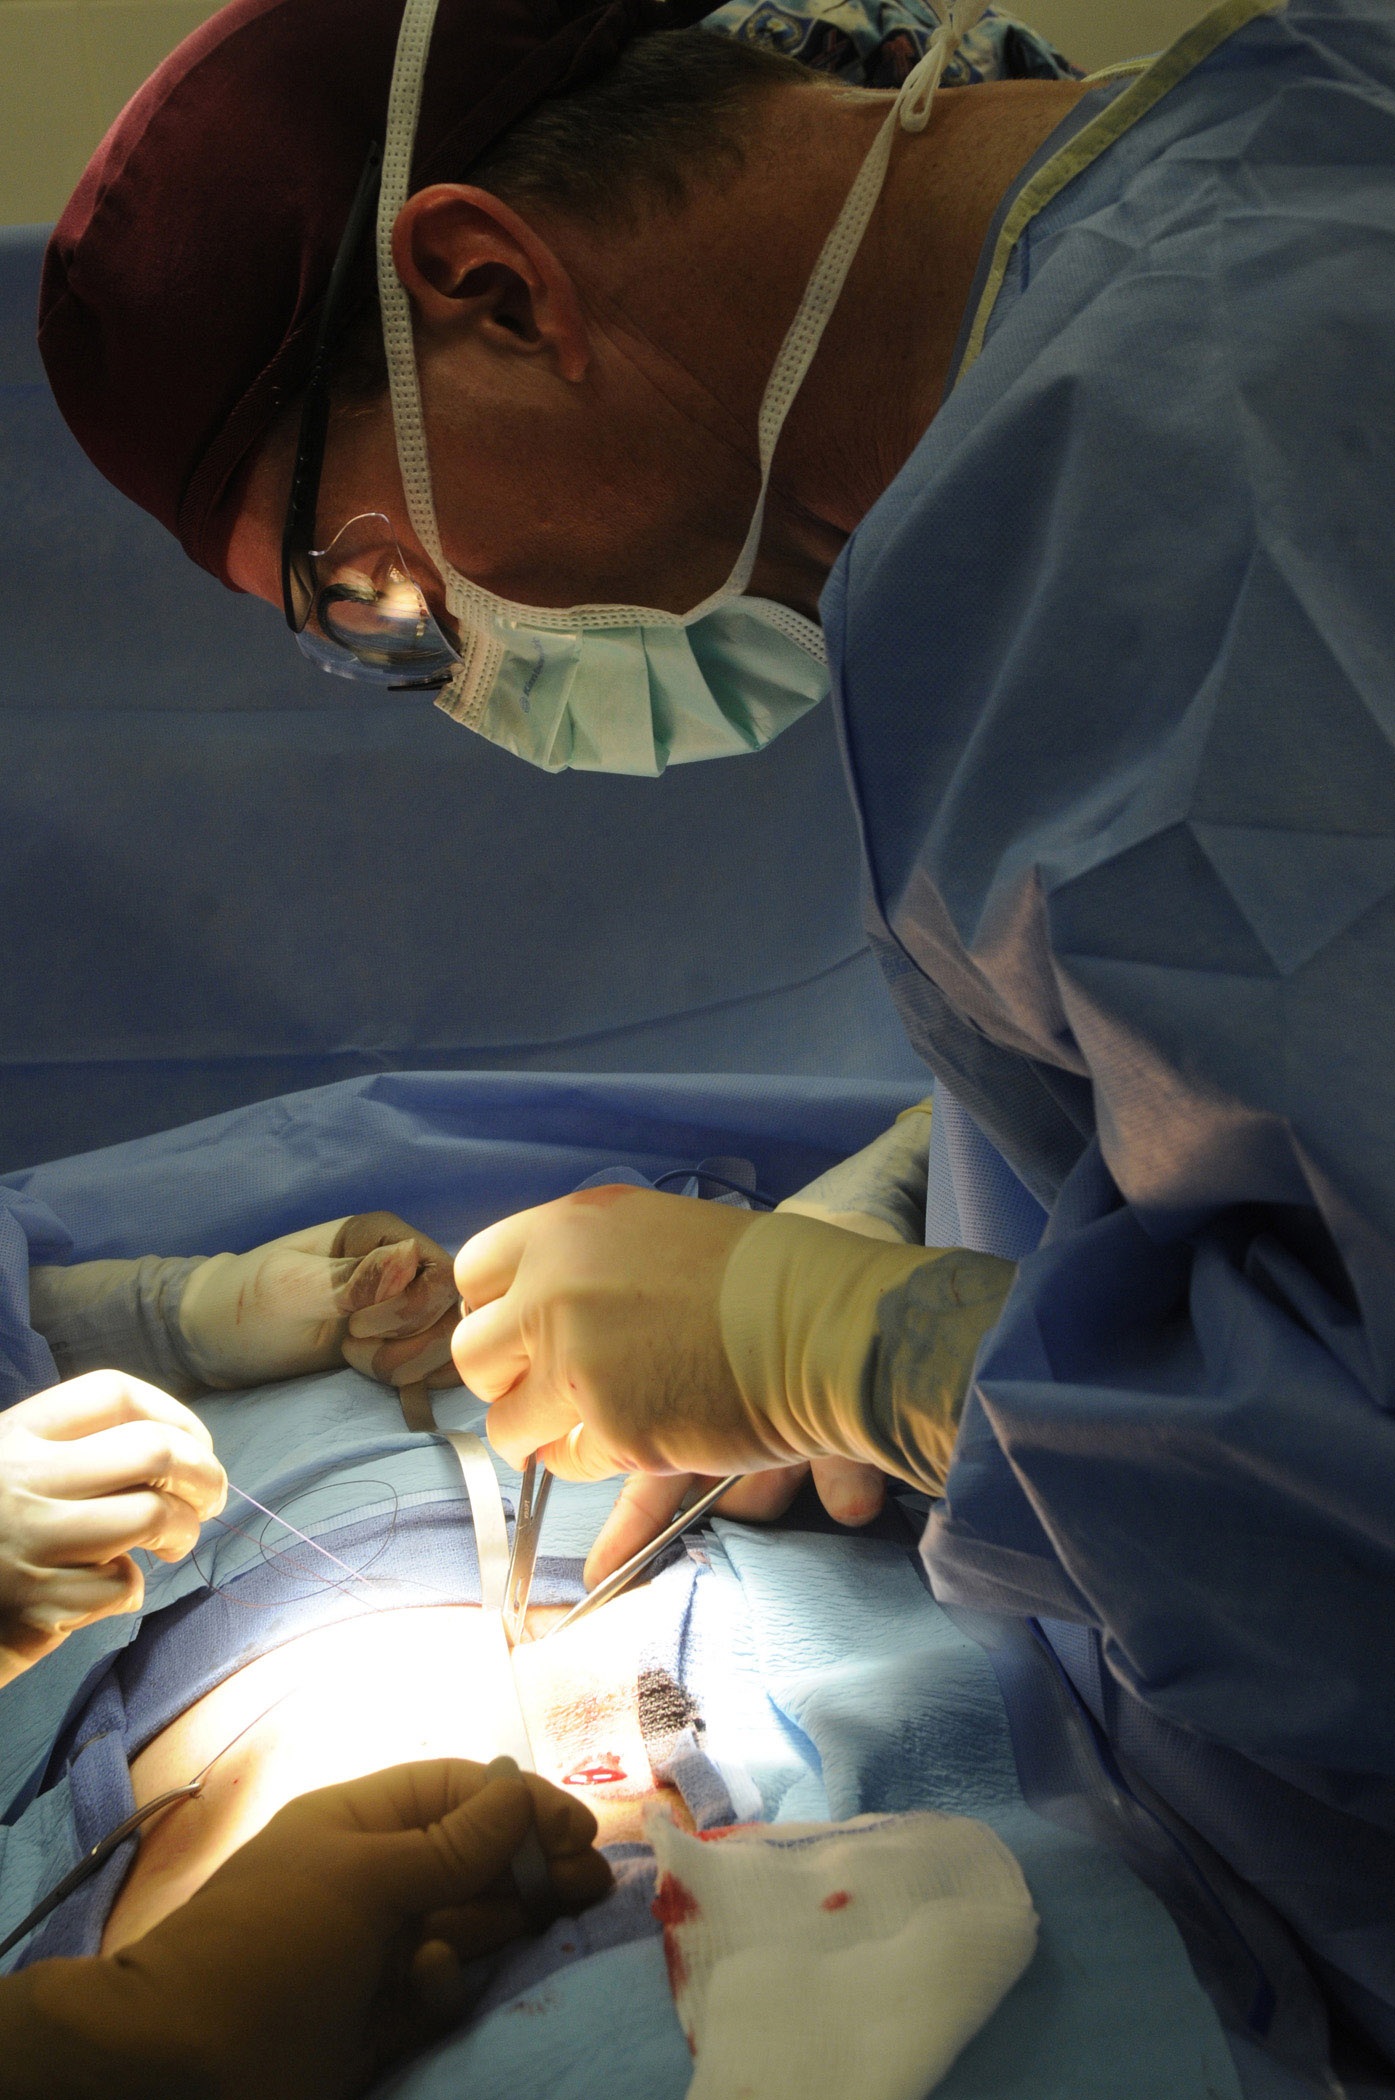 Group of surgeons operating photo